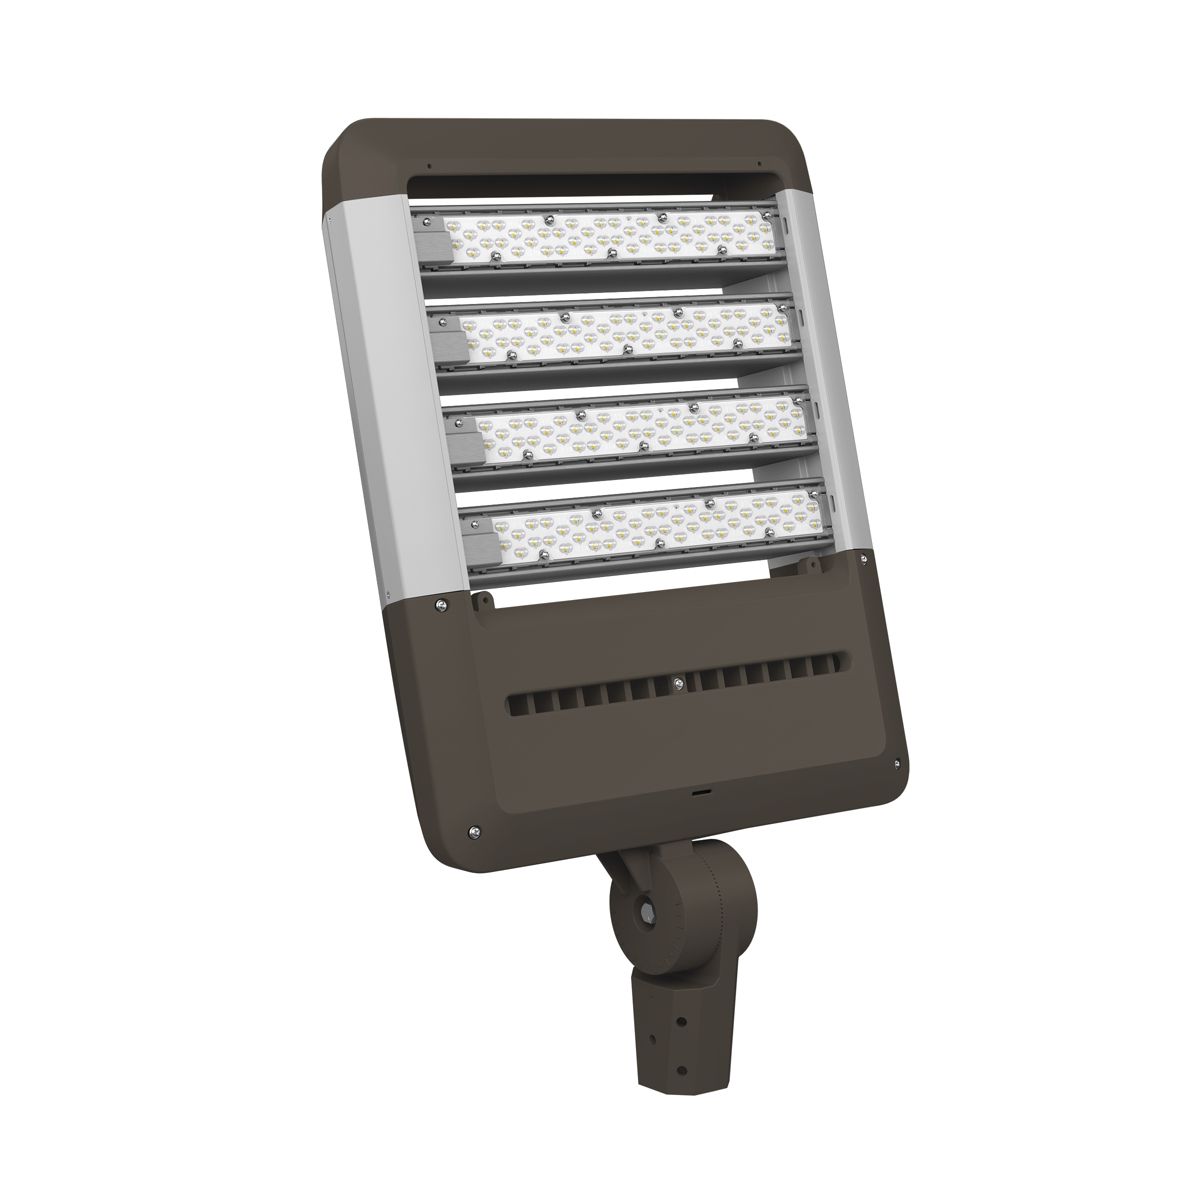 PowerForm LED high output floodlight luminaires (PFF)